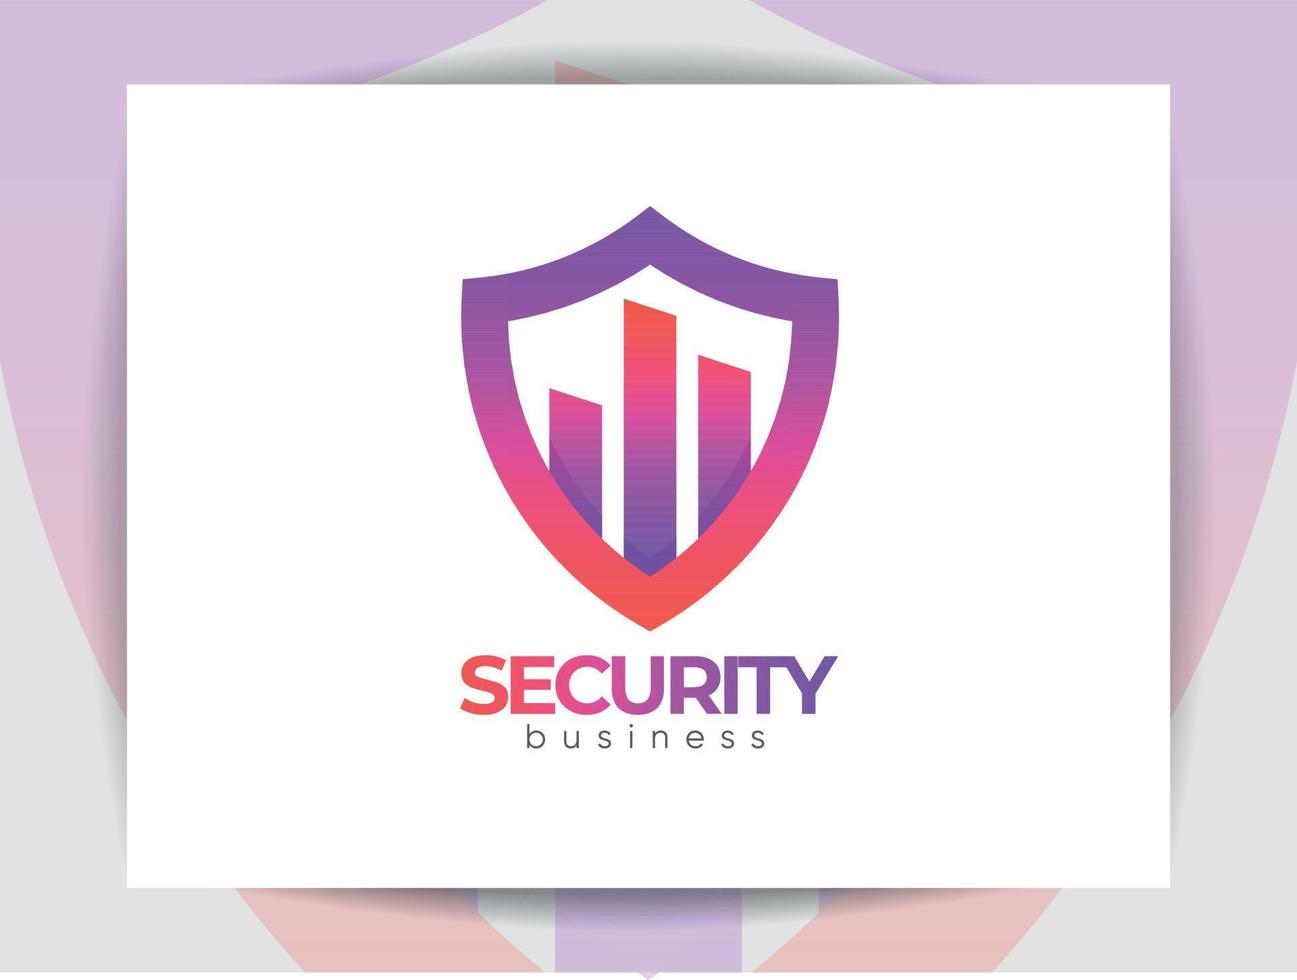 Creative Security Business Agency Logo Template, Unique Modern Digital Concept, Hi-Quality Design Concept With Gradient Color, Creative Digital Abstract Security Business, And logo Concept Design. vector